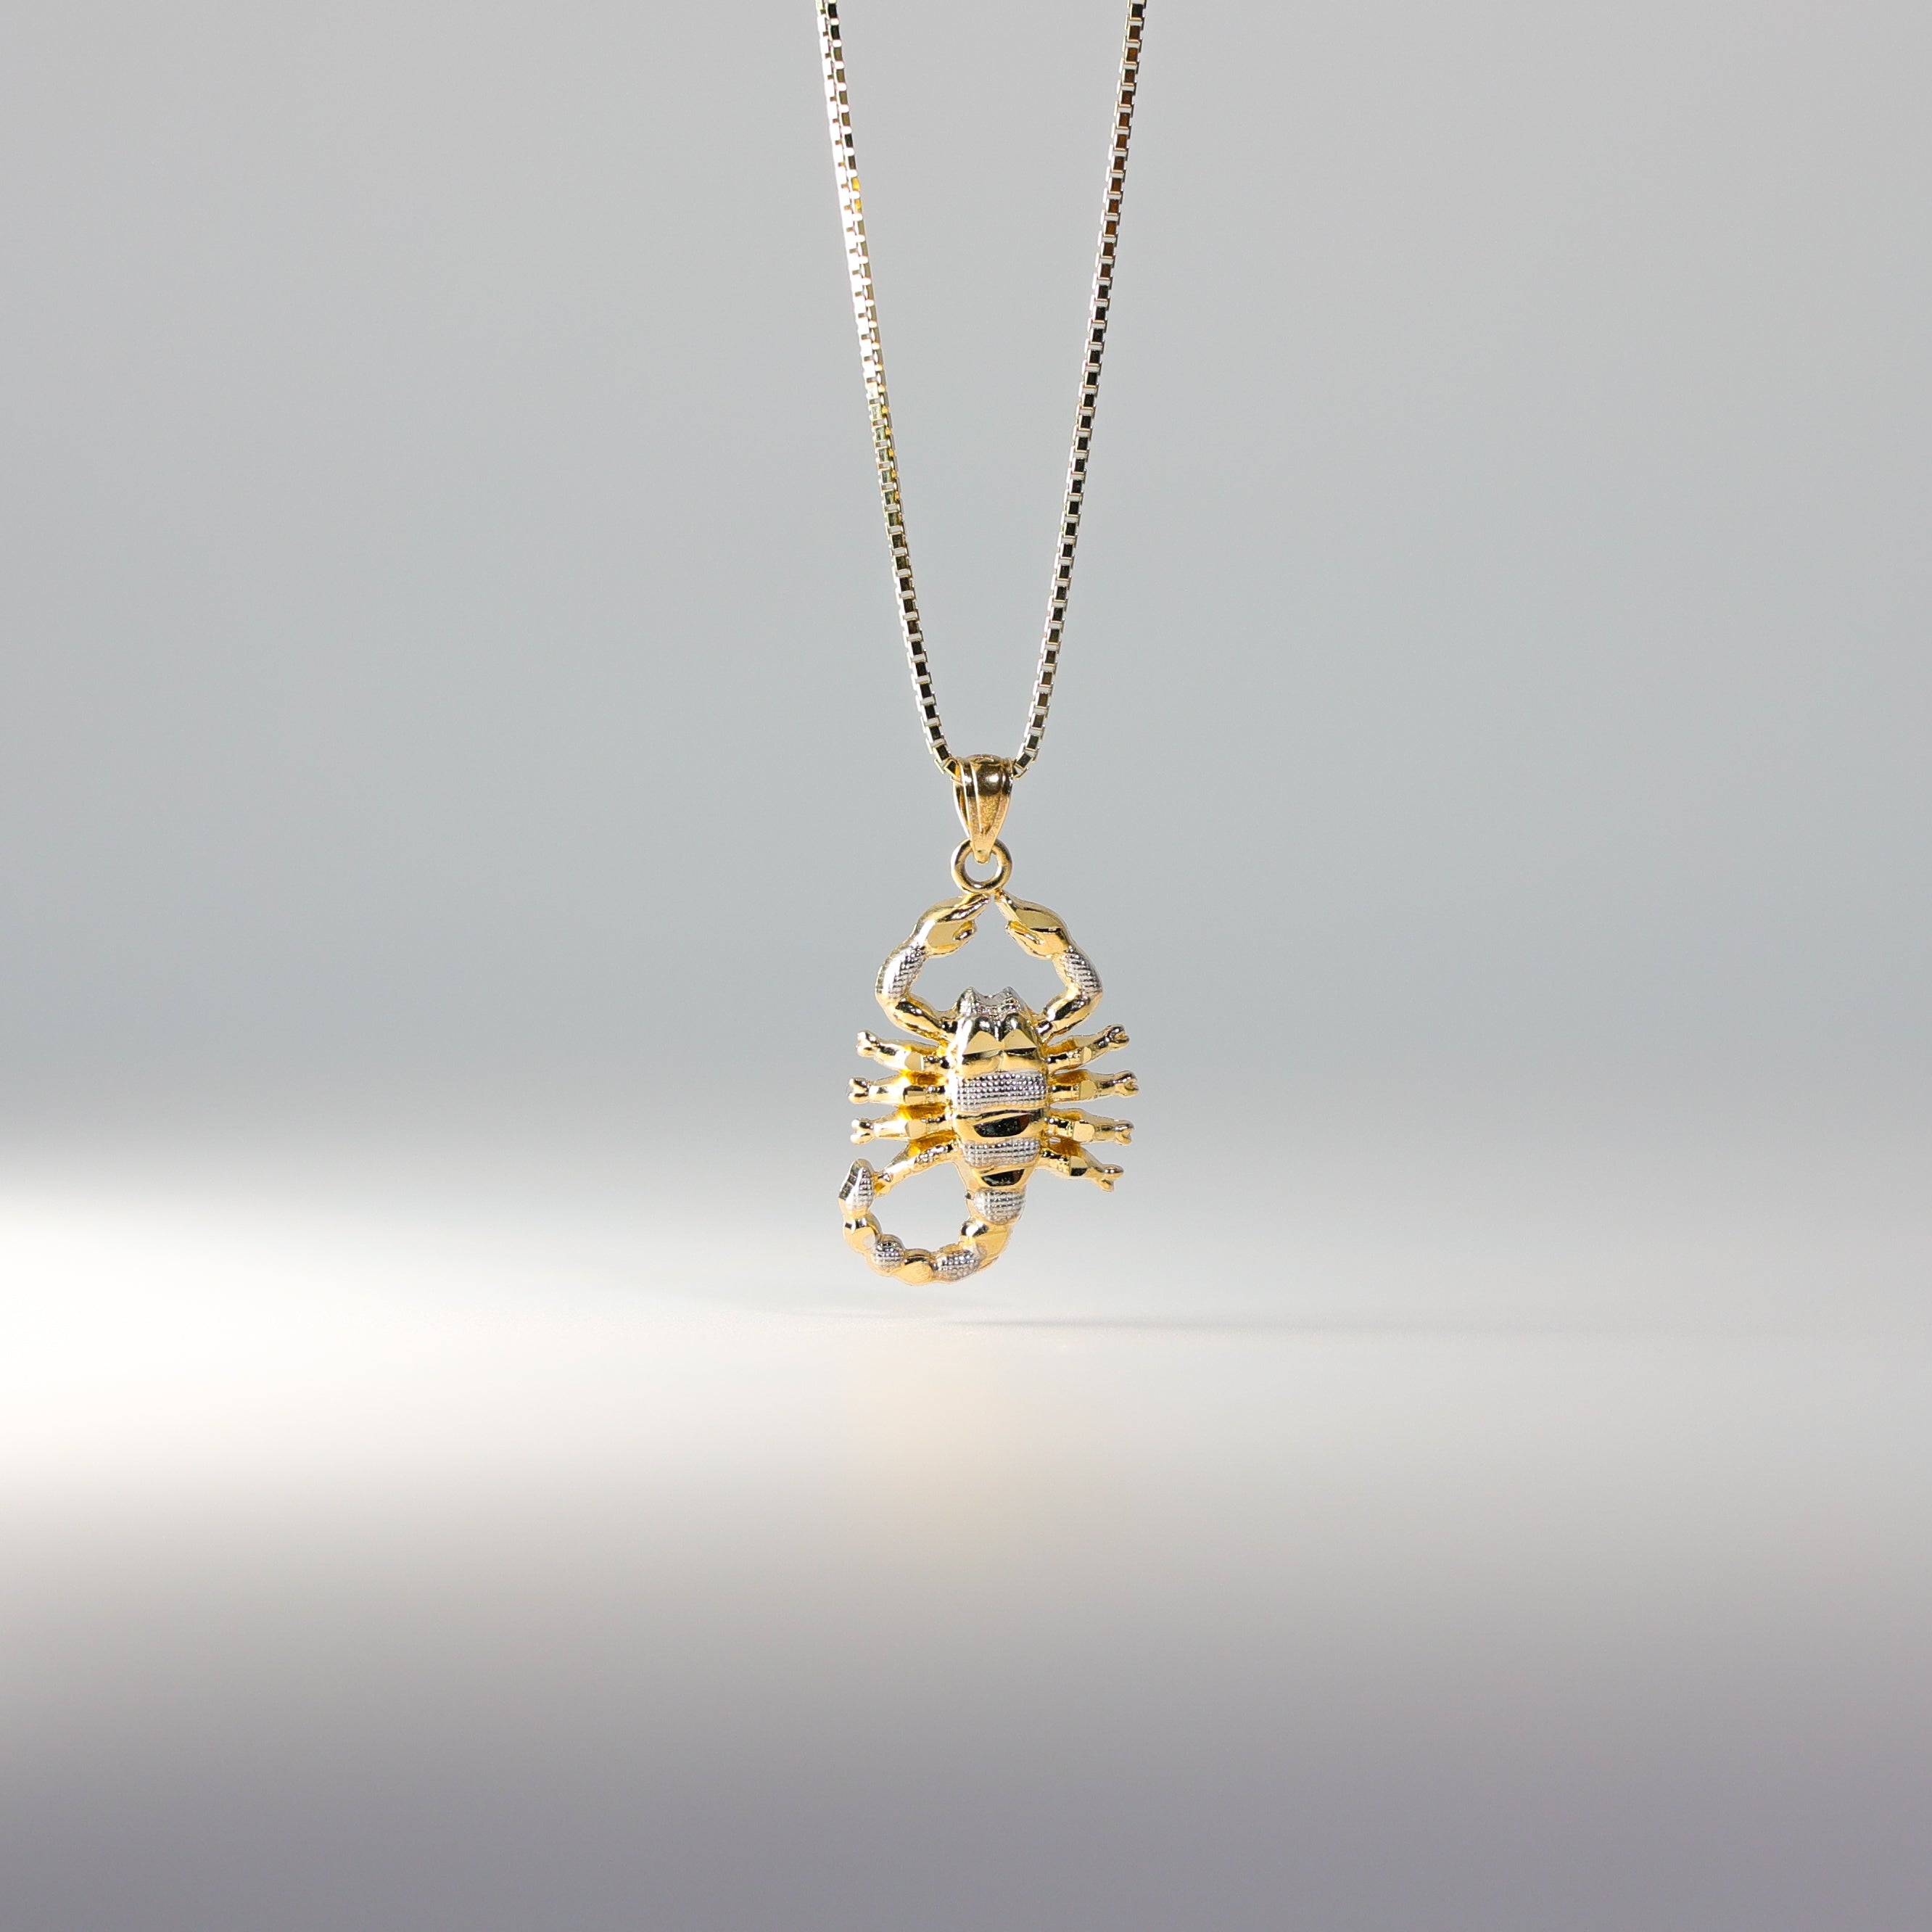 Gold Scorpion Pendant Model-1588 - Charlie & Co. Jewelry